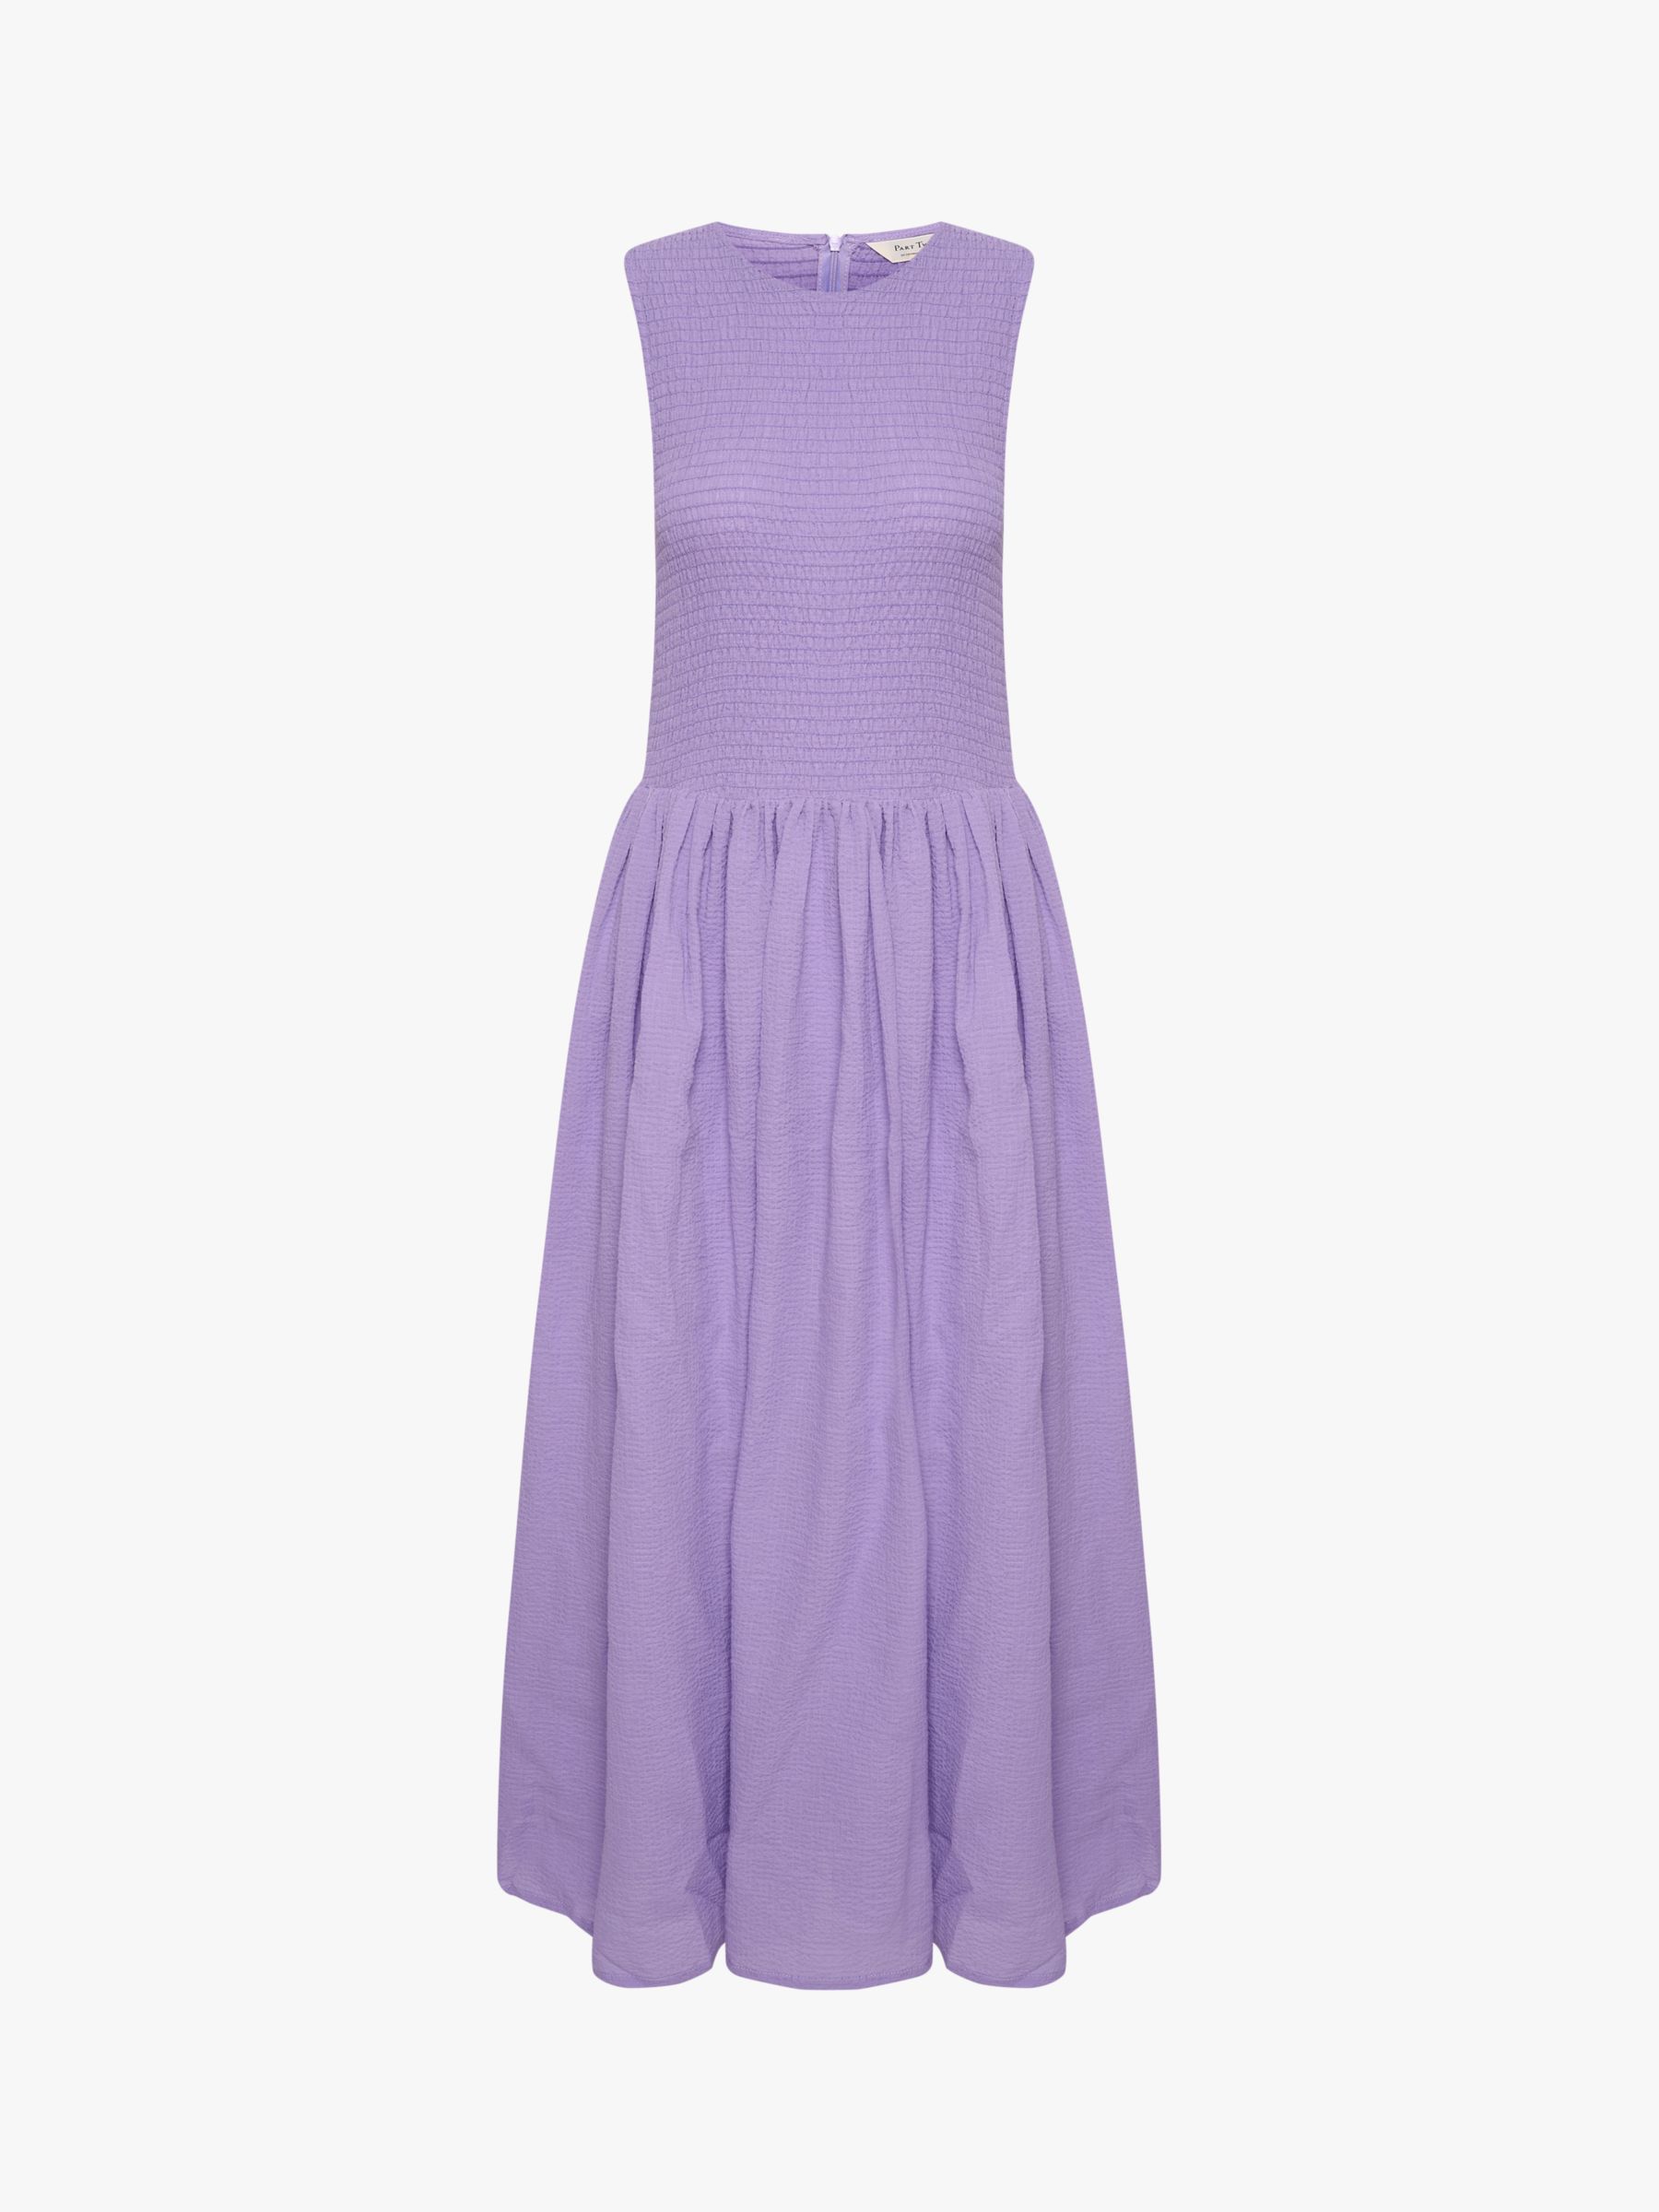 Buy Part Two Ornina Smocked Bodice Midi Dress, Sunlit Allium Online at johnlewis.com